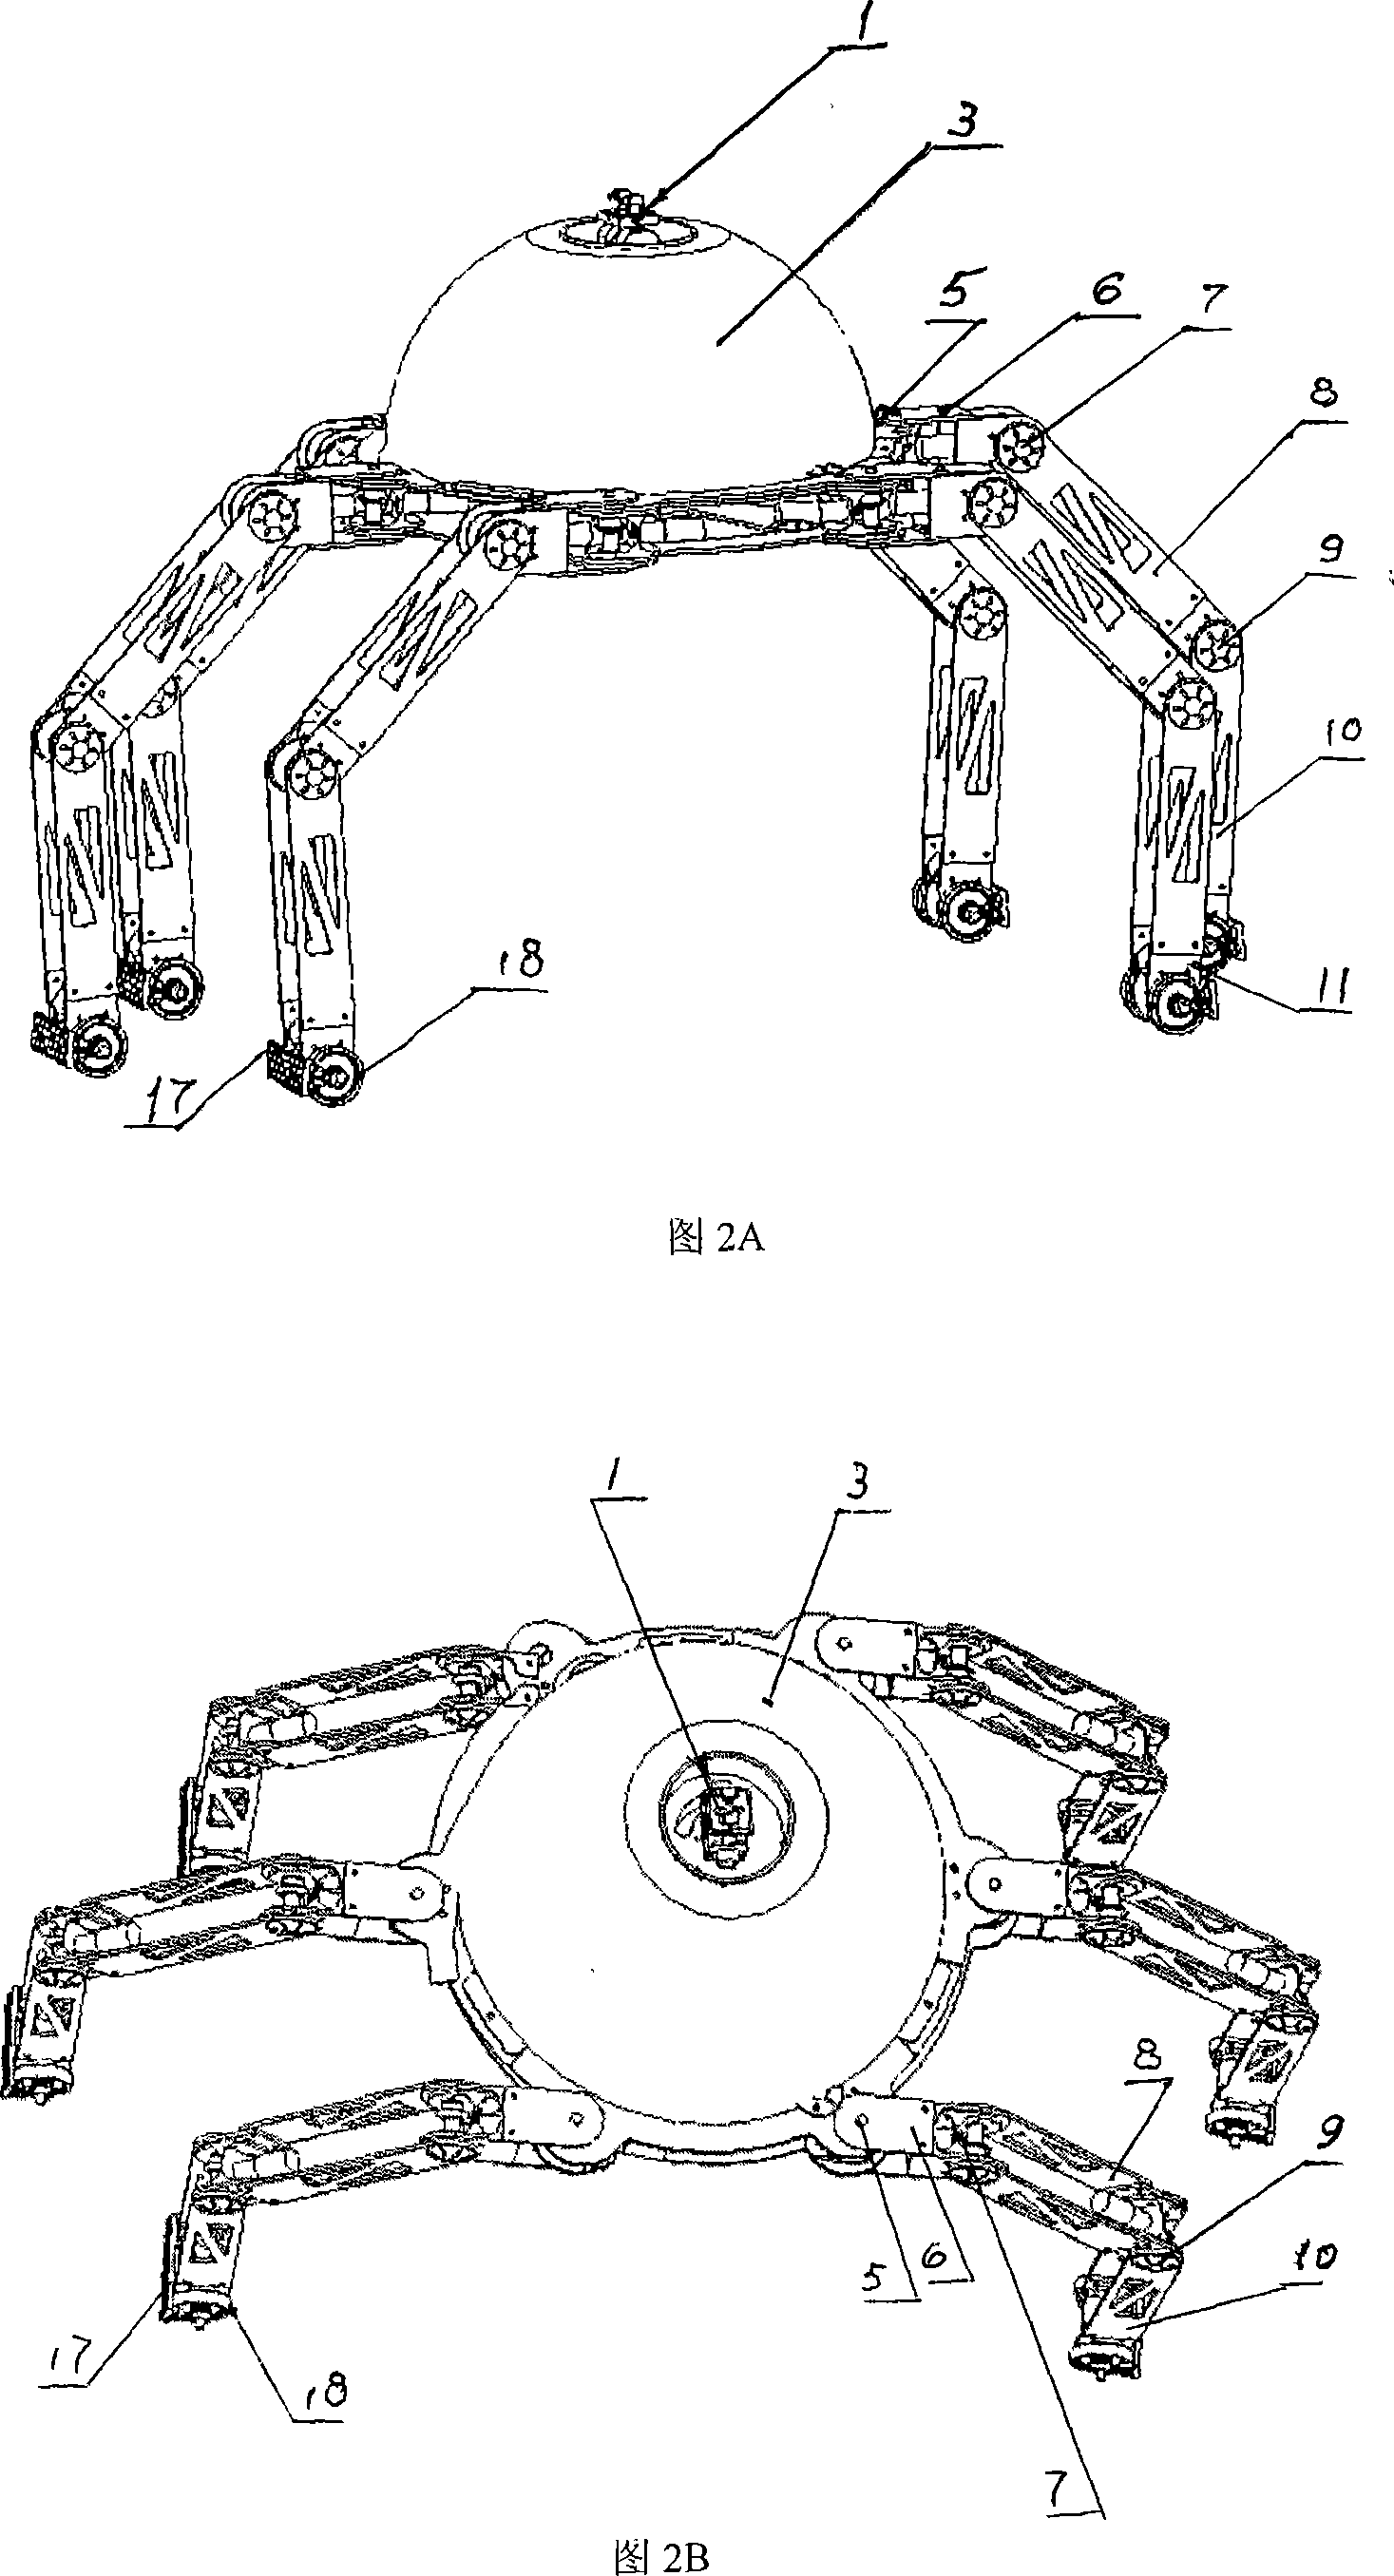 Six-wheel/leg hemispherical outer casing detecting robot